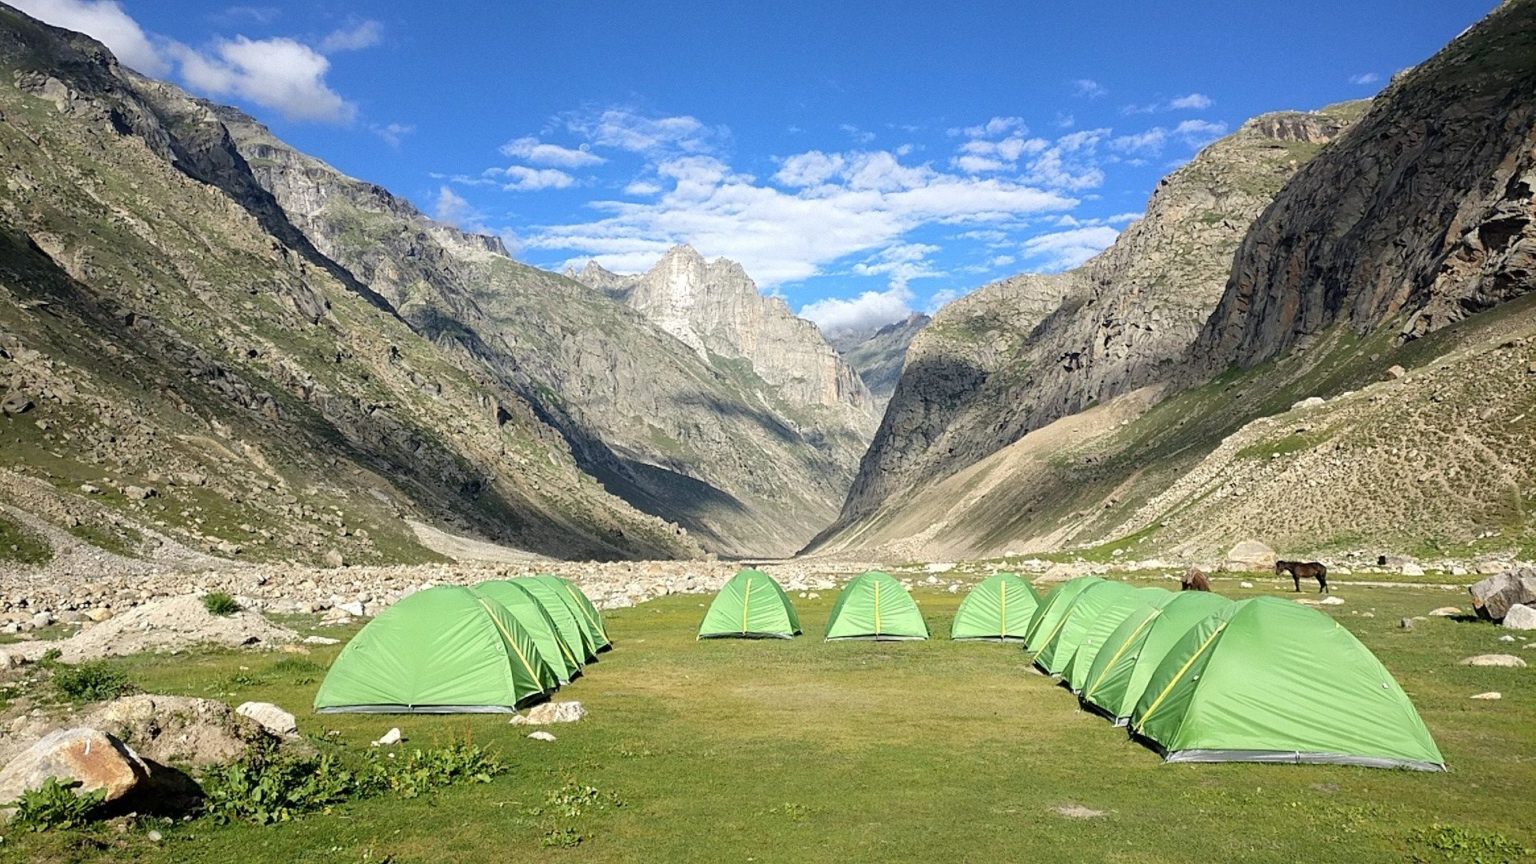 Spiti Valley Camping - May, 2020 - Tripवाणी